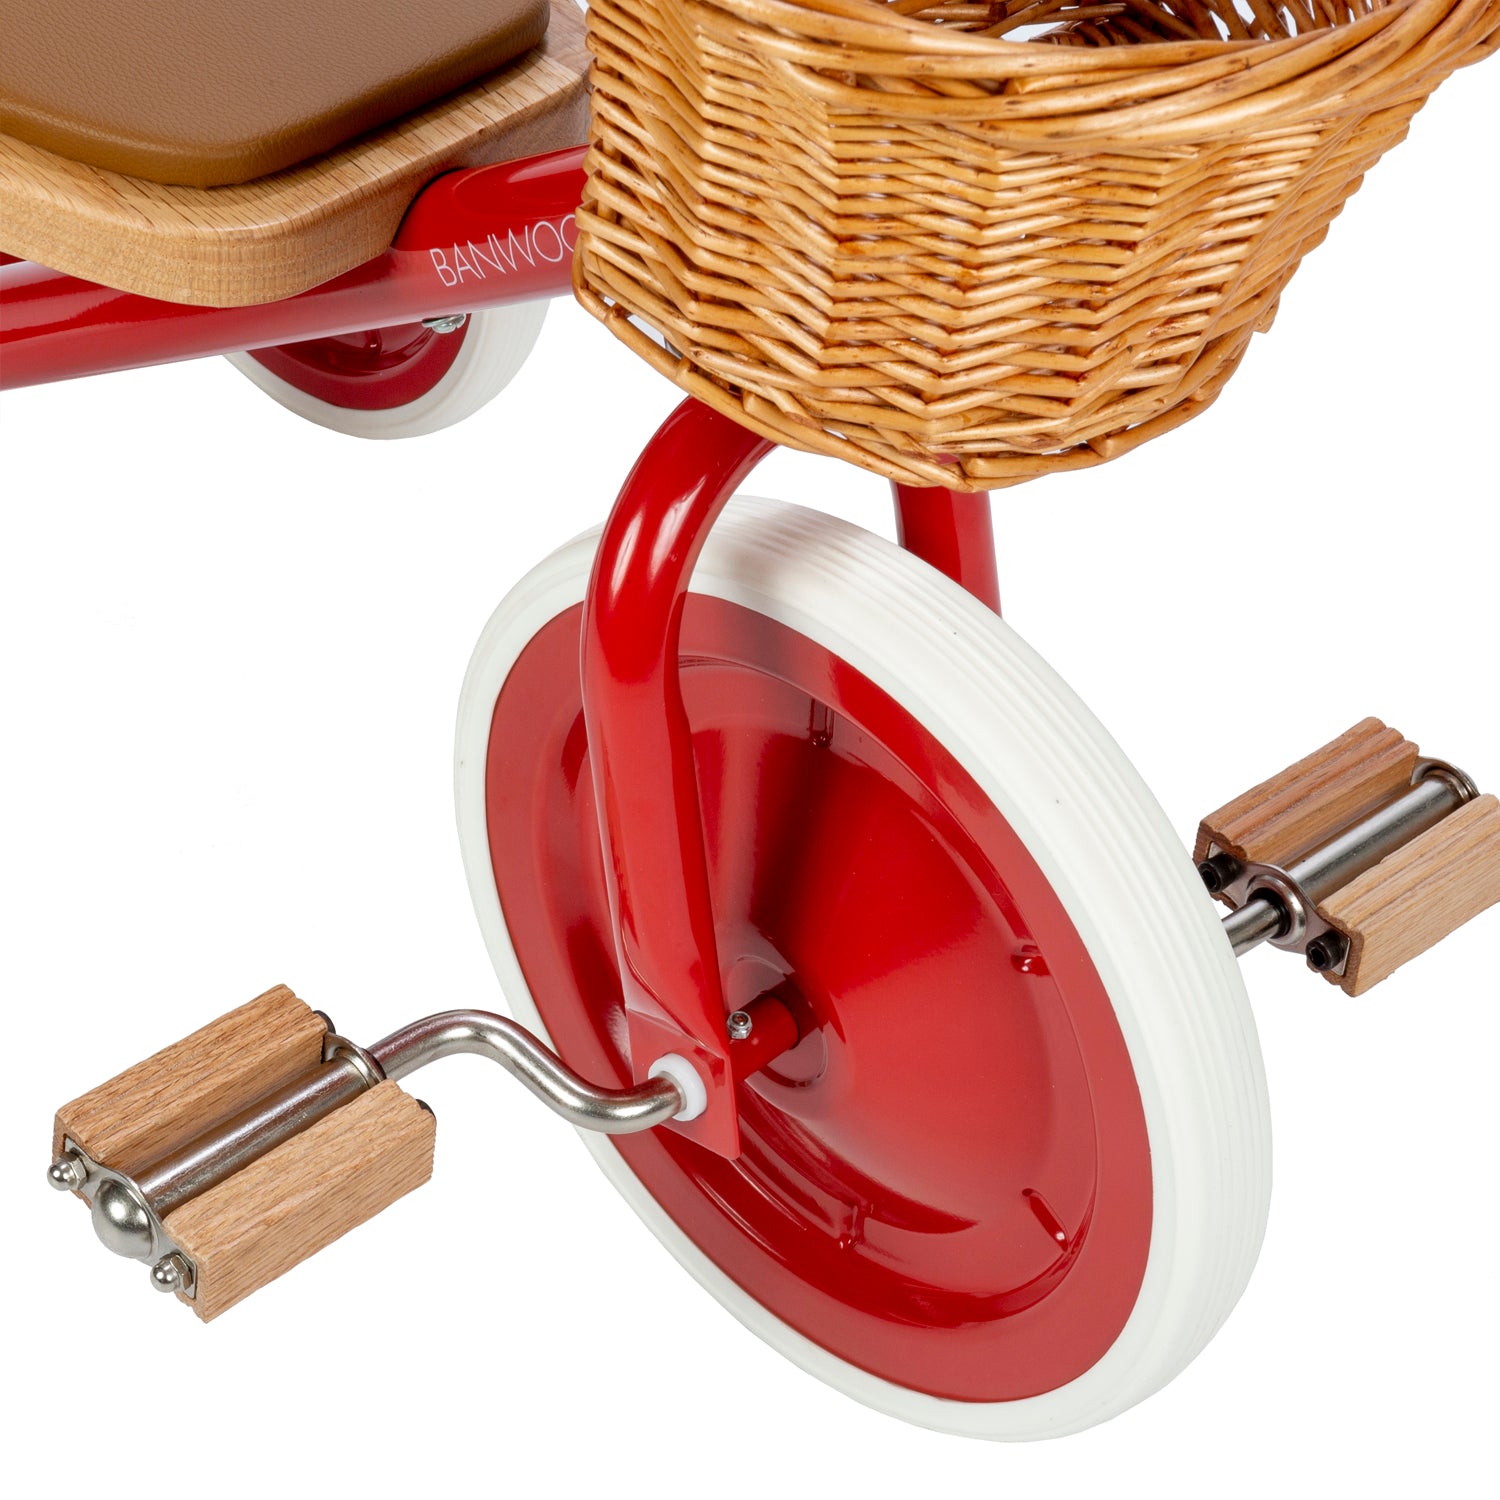 Banwood Trike (and basket)- Red